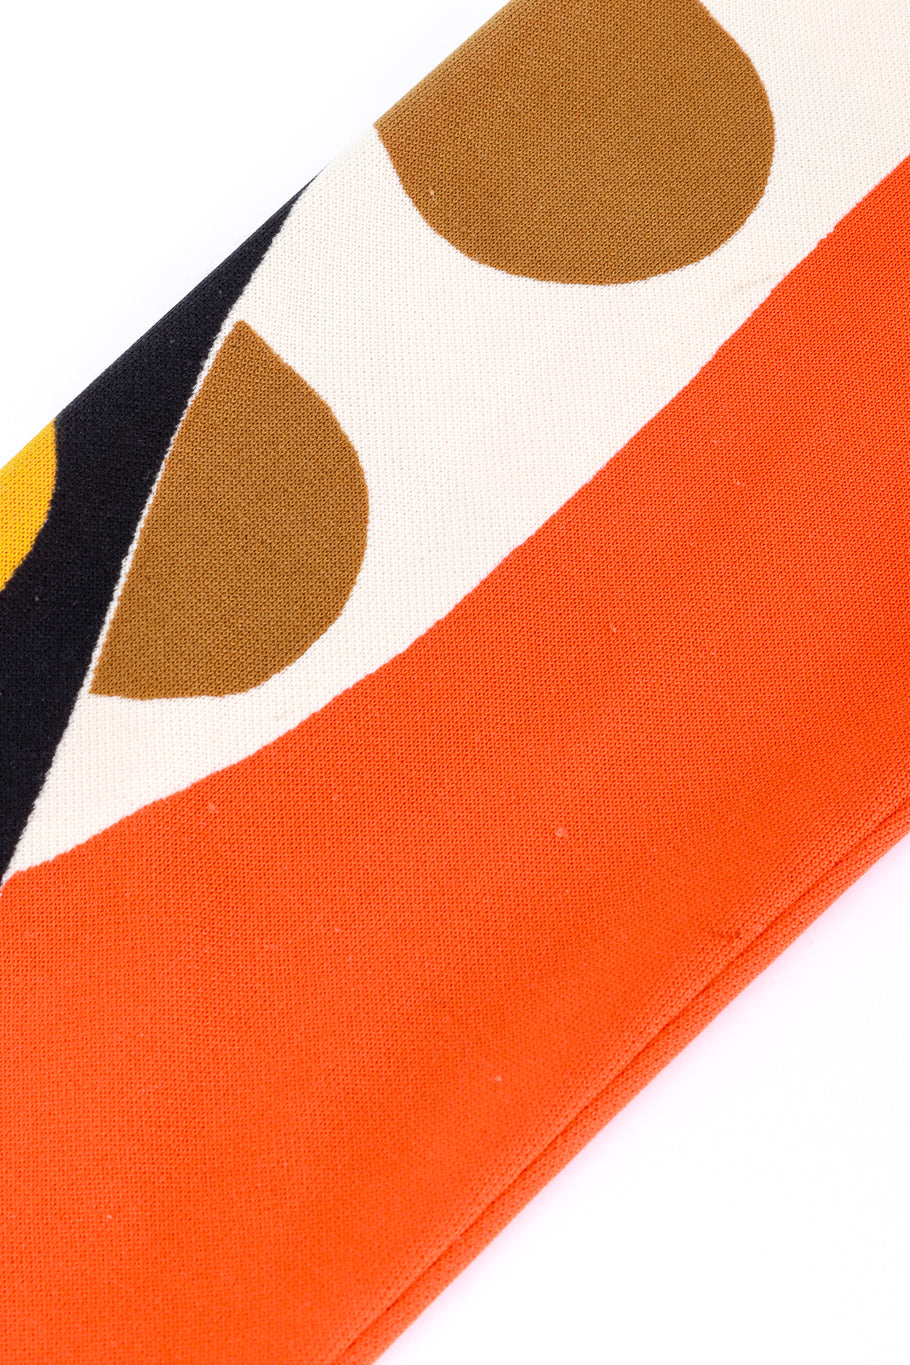 Vintage Vera Neumann Mod Circle Print Dress snag marks closeup @recess la